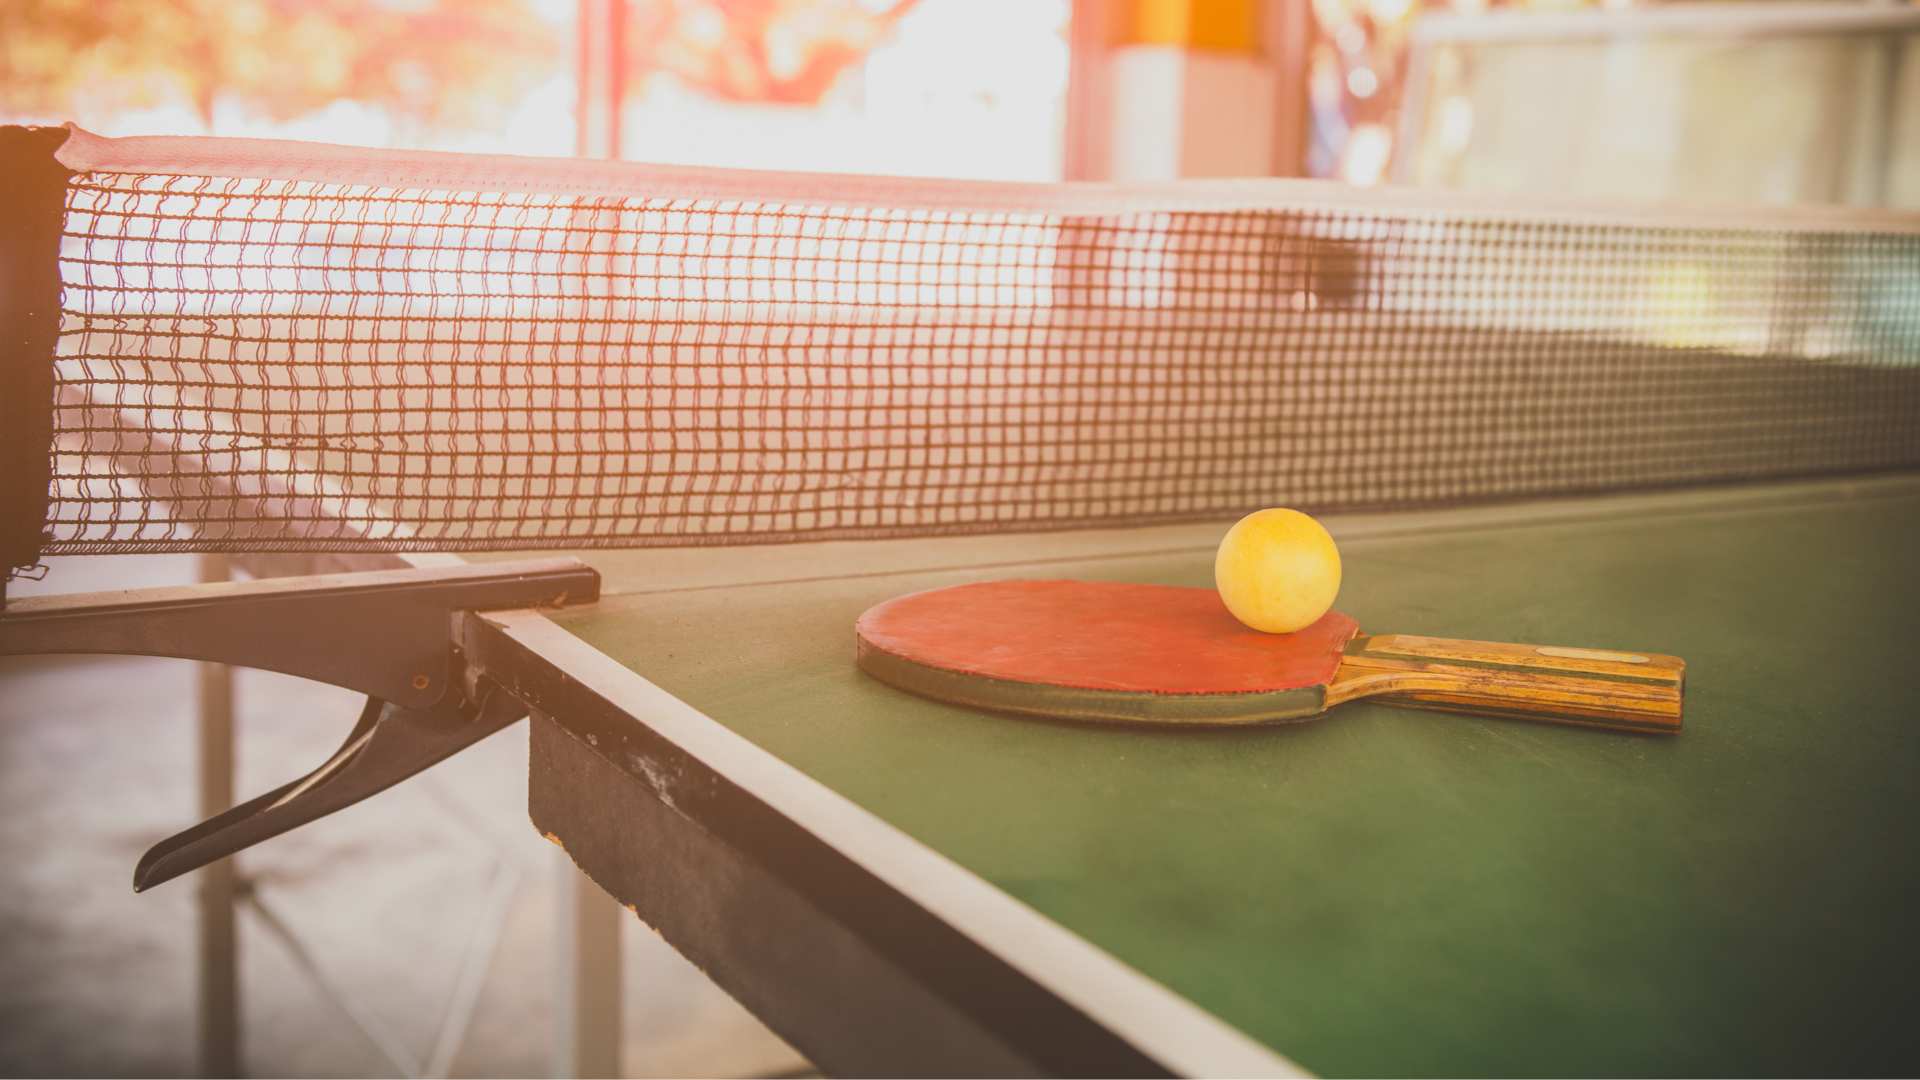 Une table de ping-pong